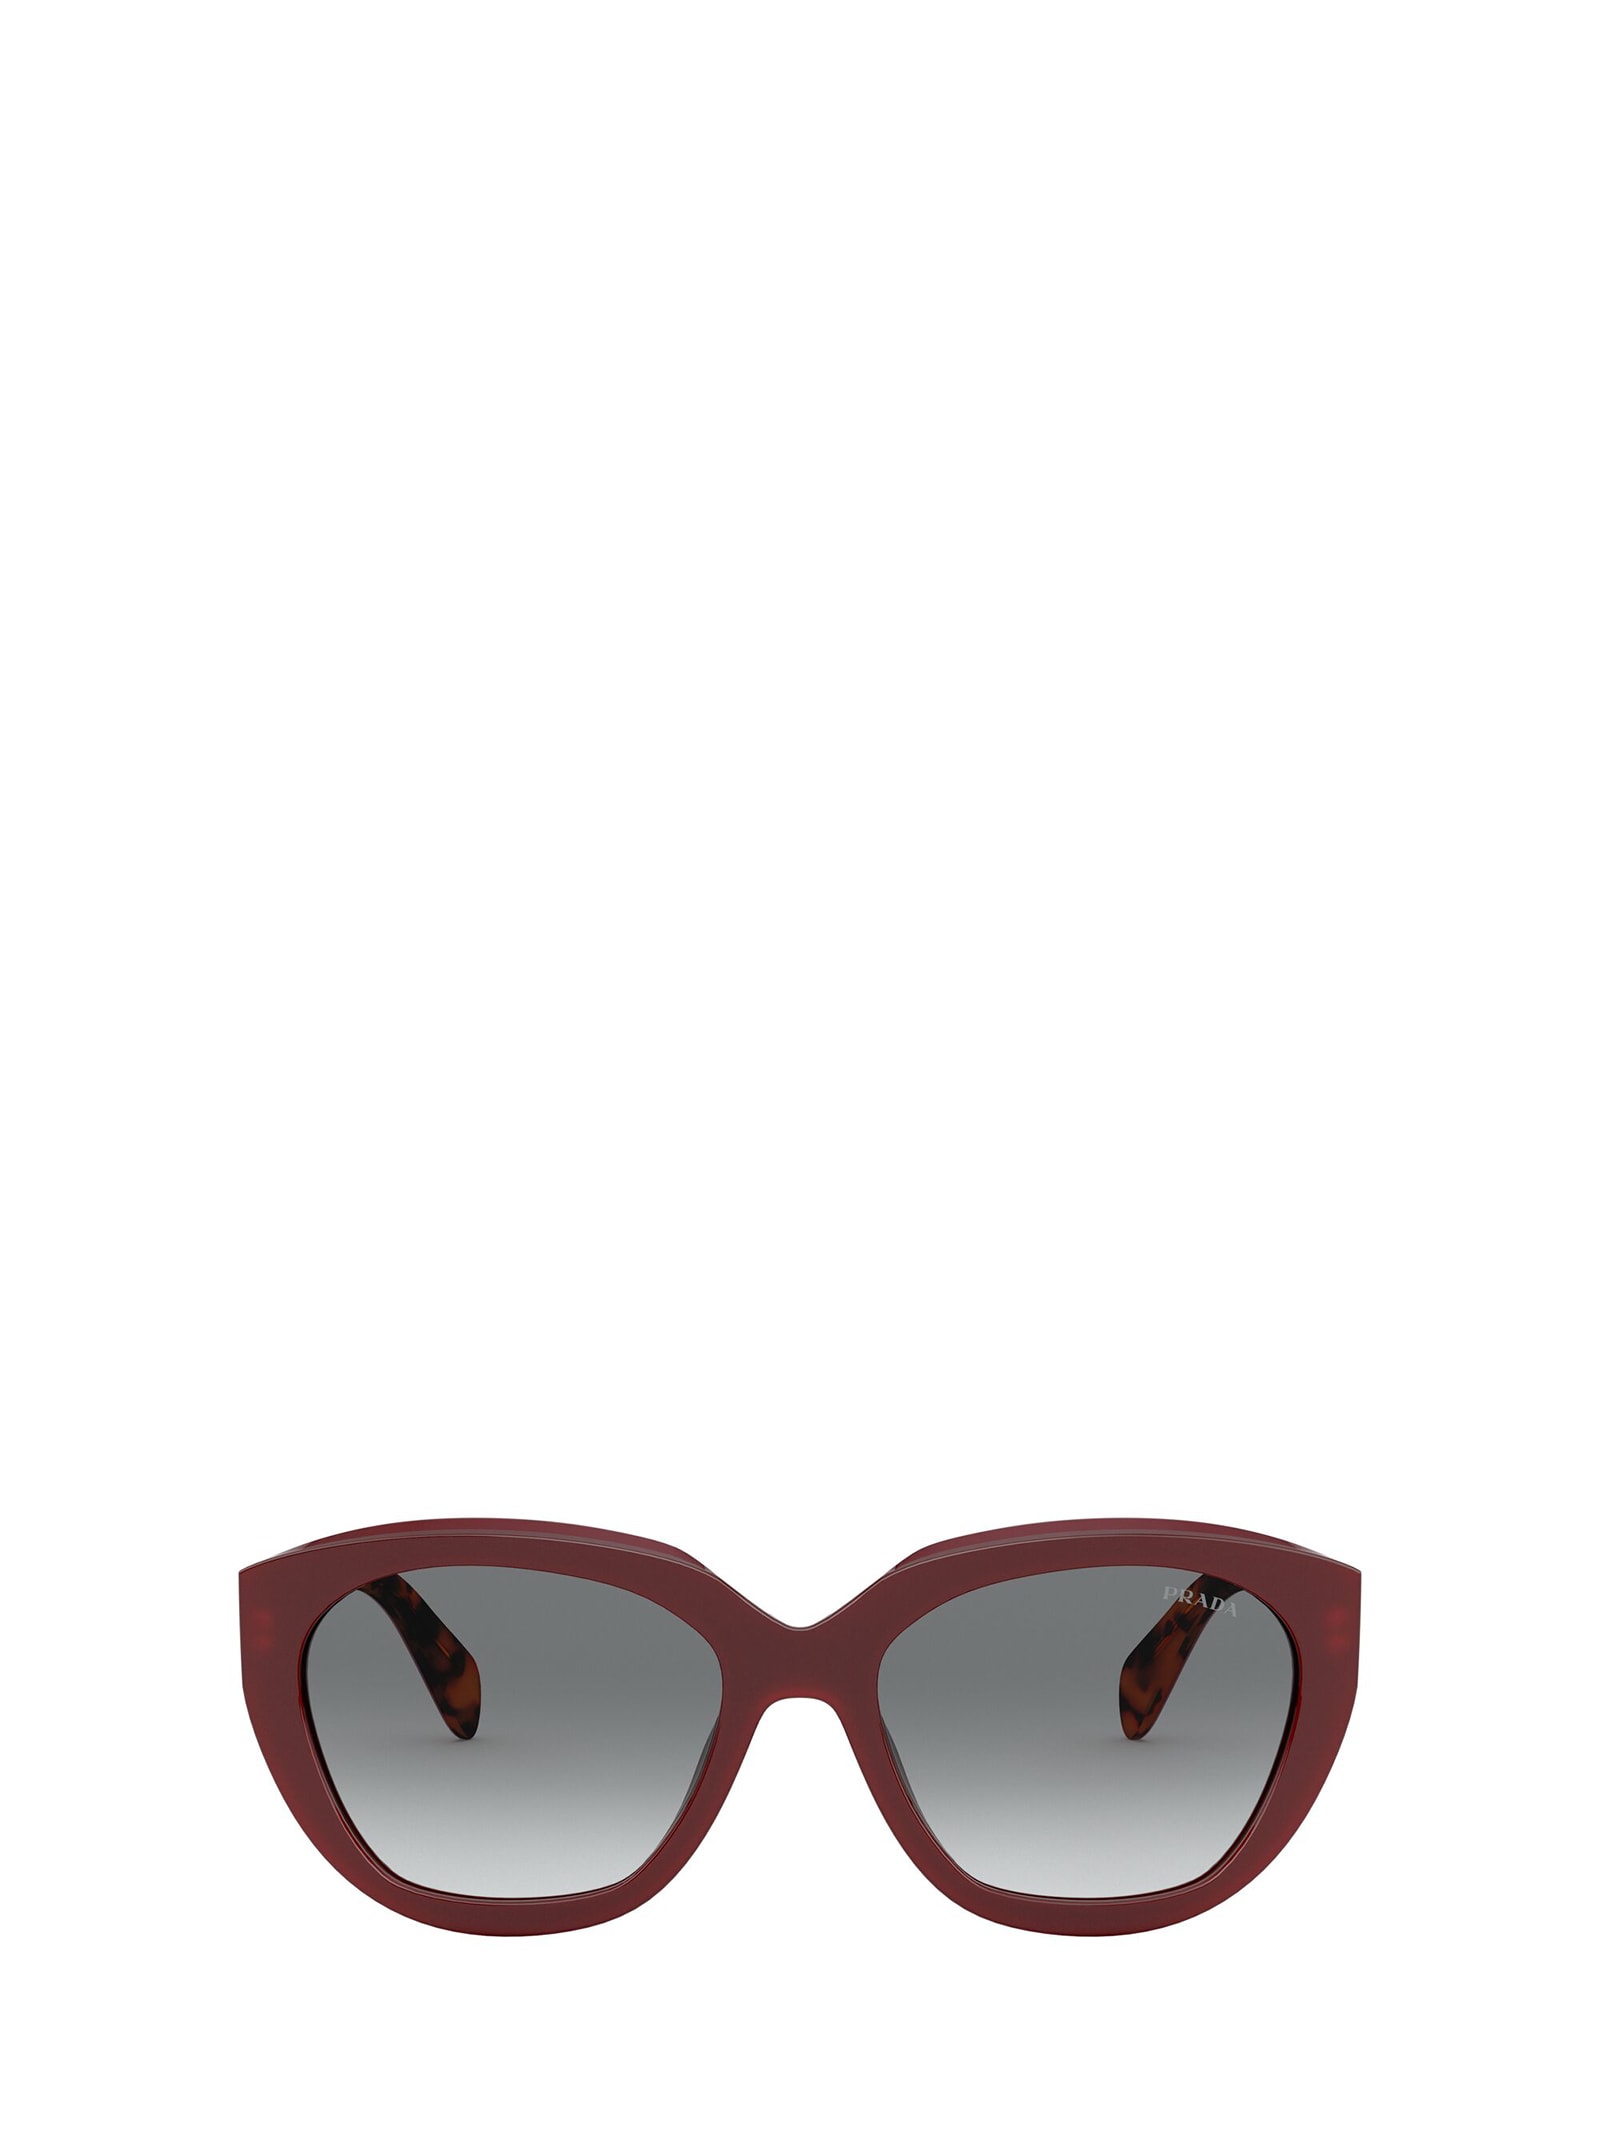 Prada Prada Pr 16xs Red Sunglasses